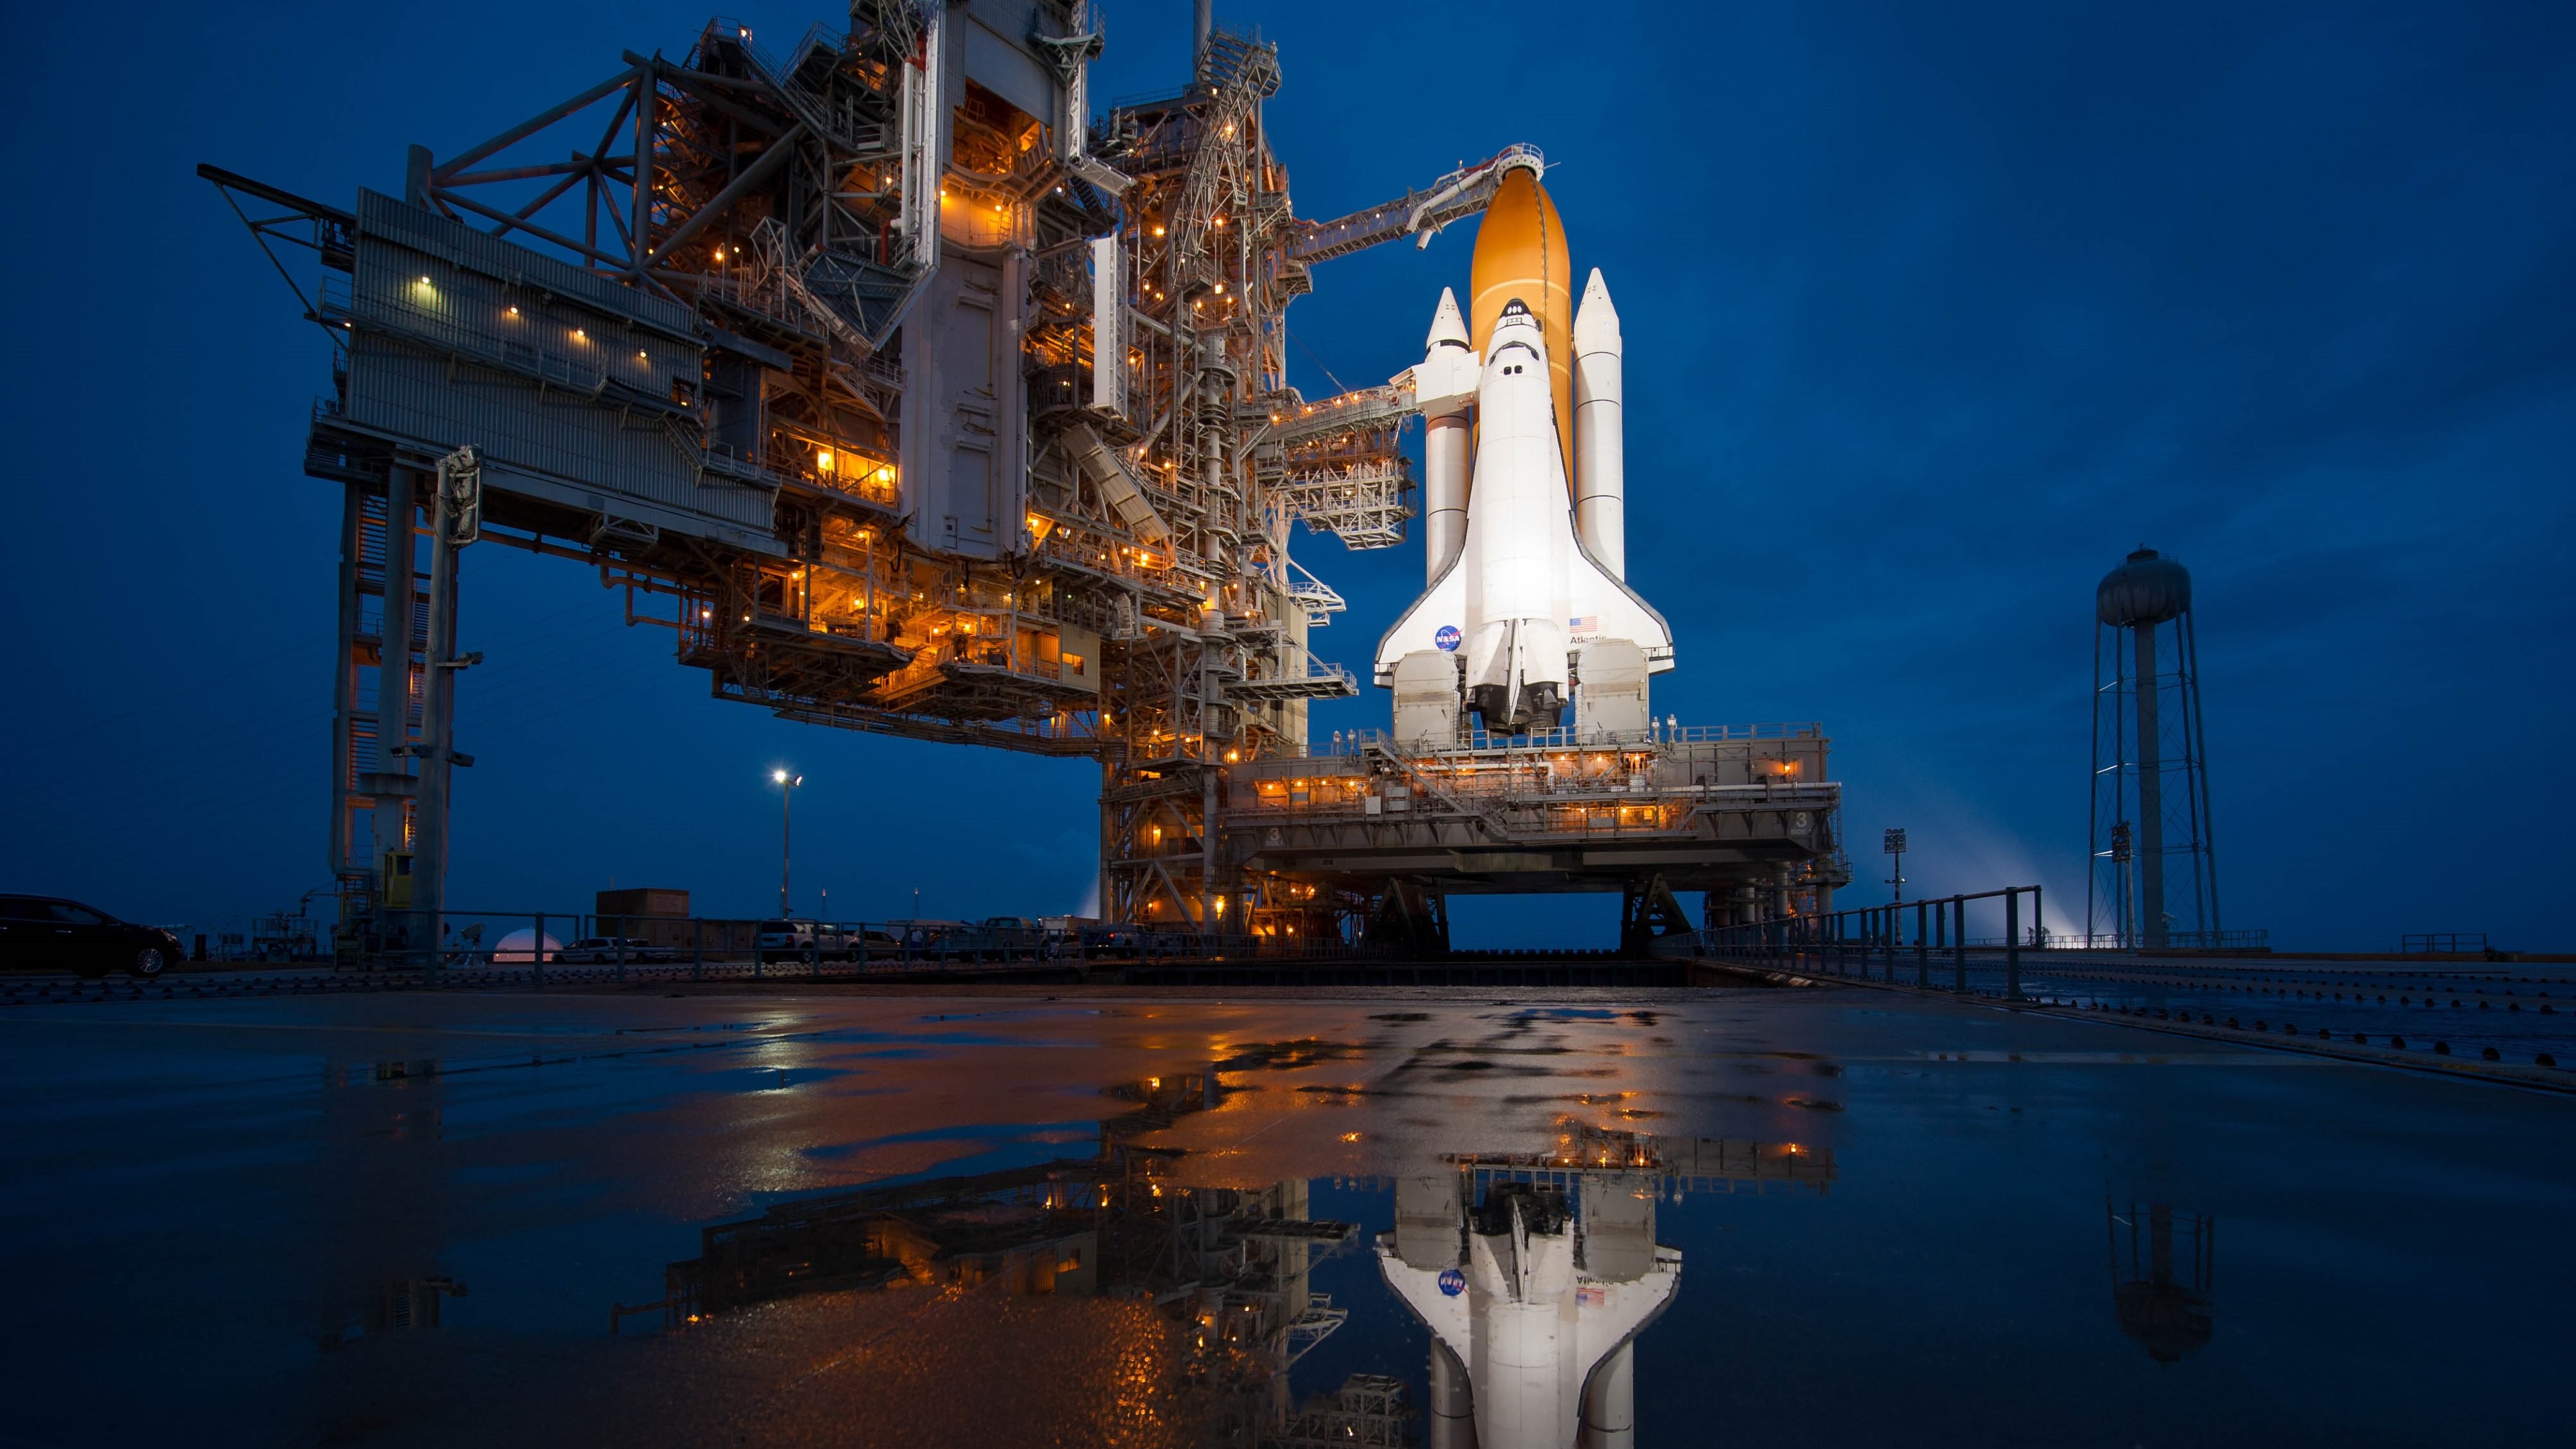 nasa space shuttle launch hd